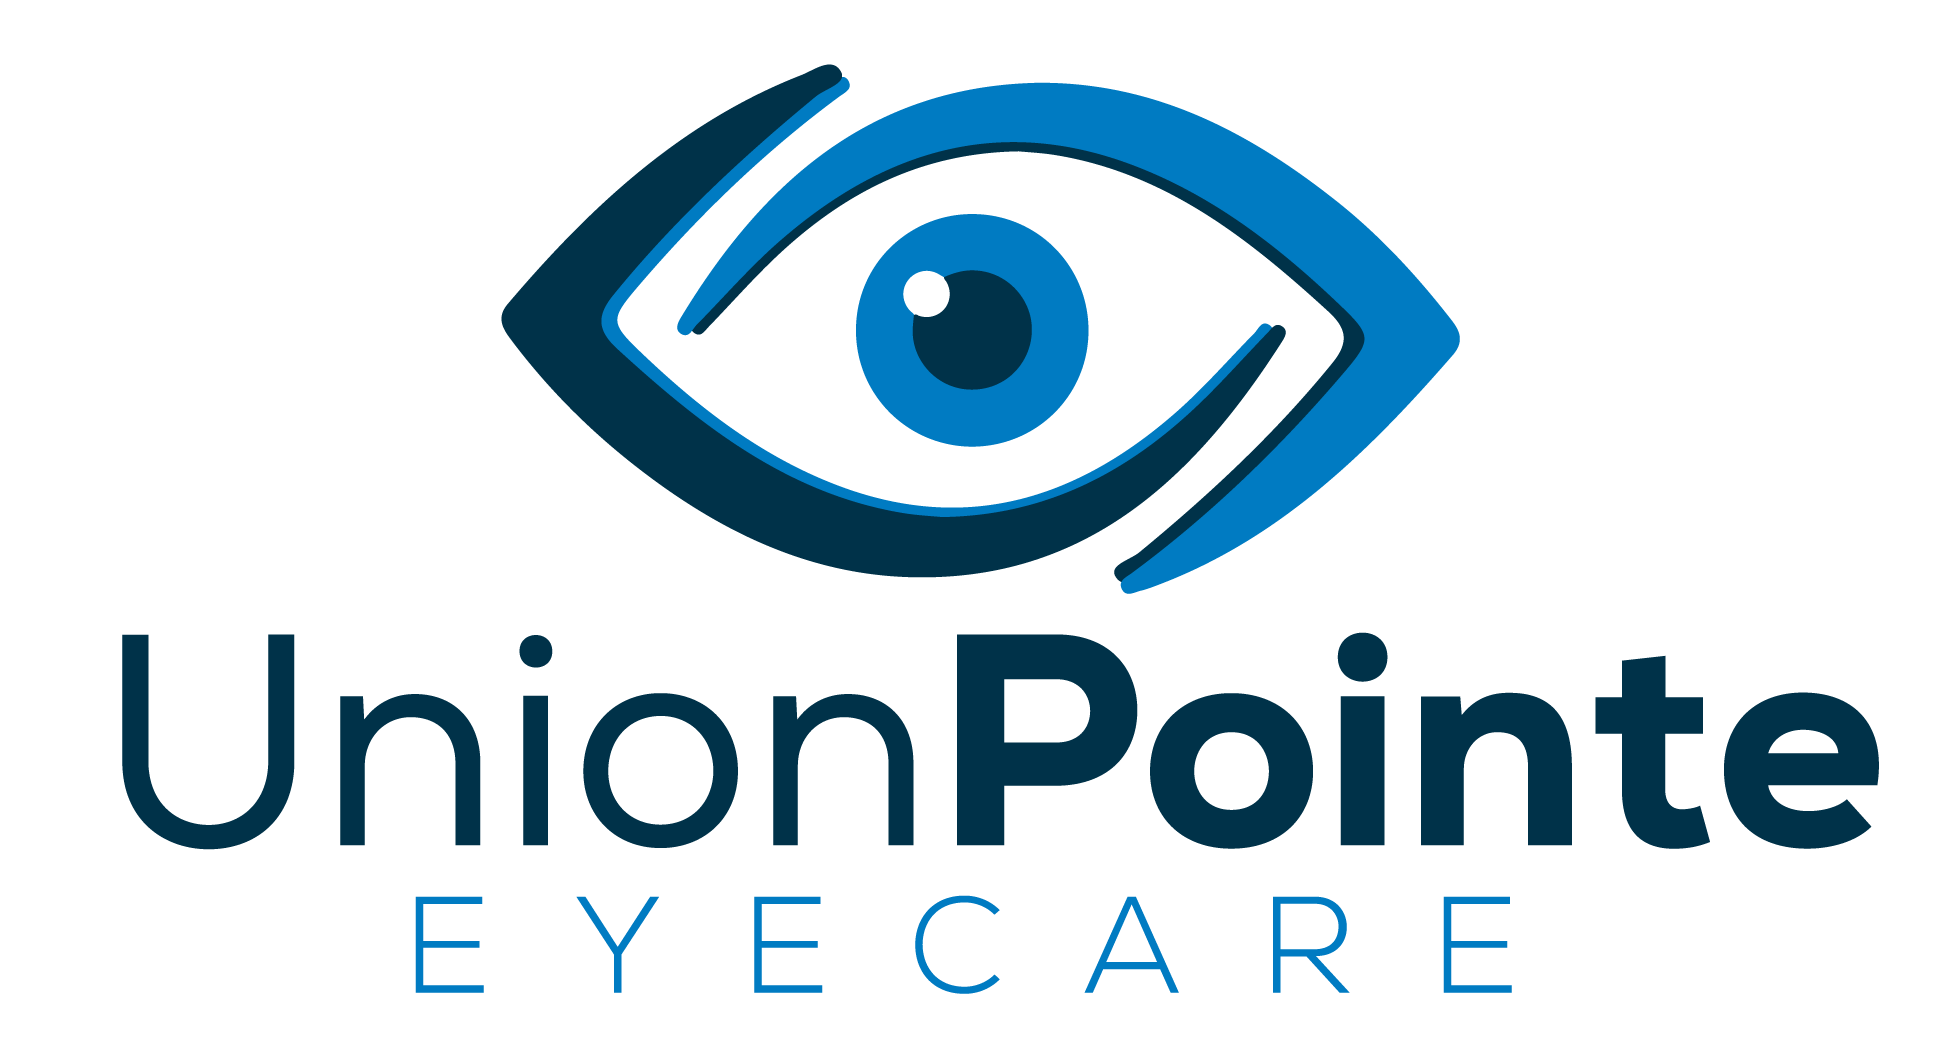 Union Pointe Eyecare